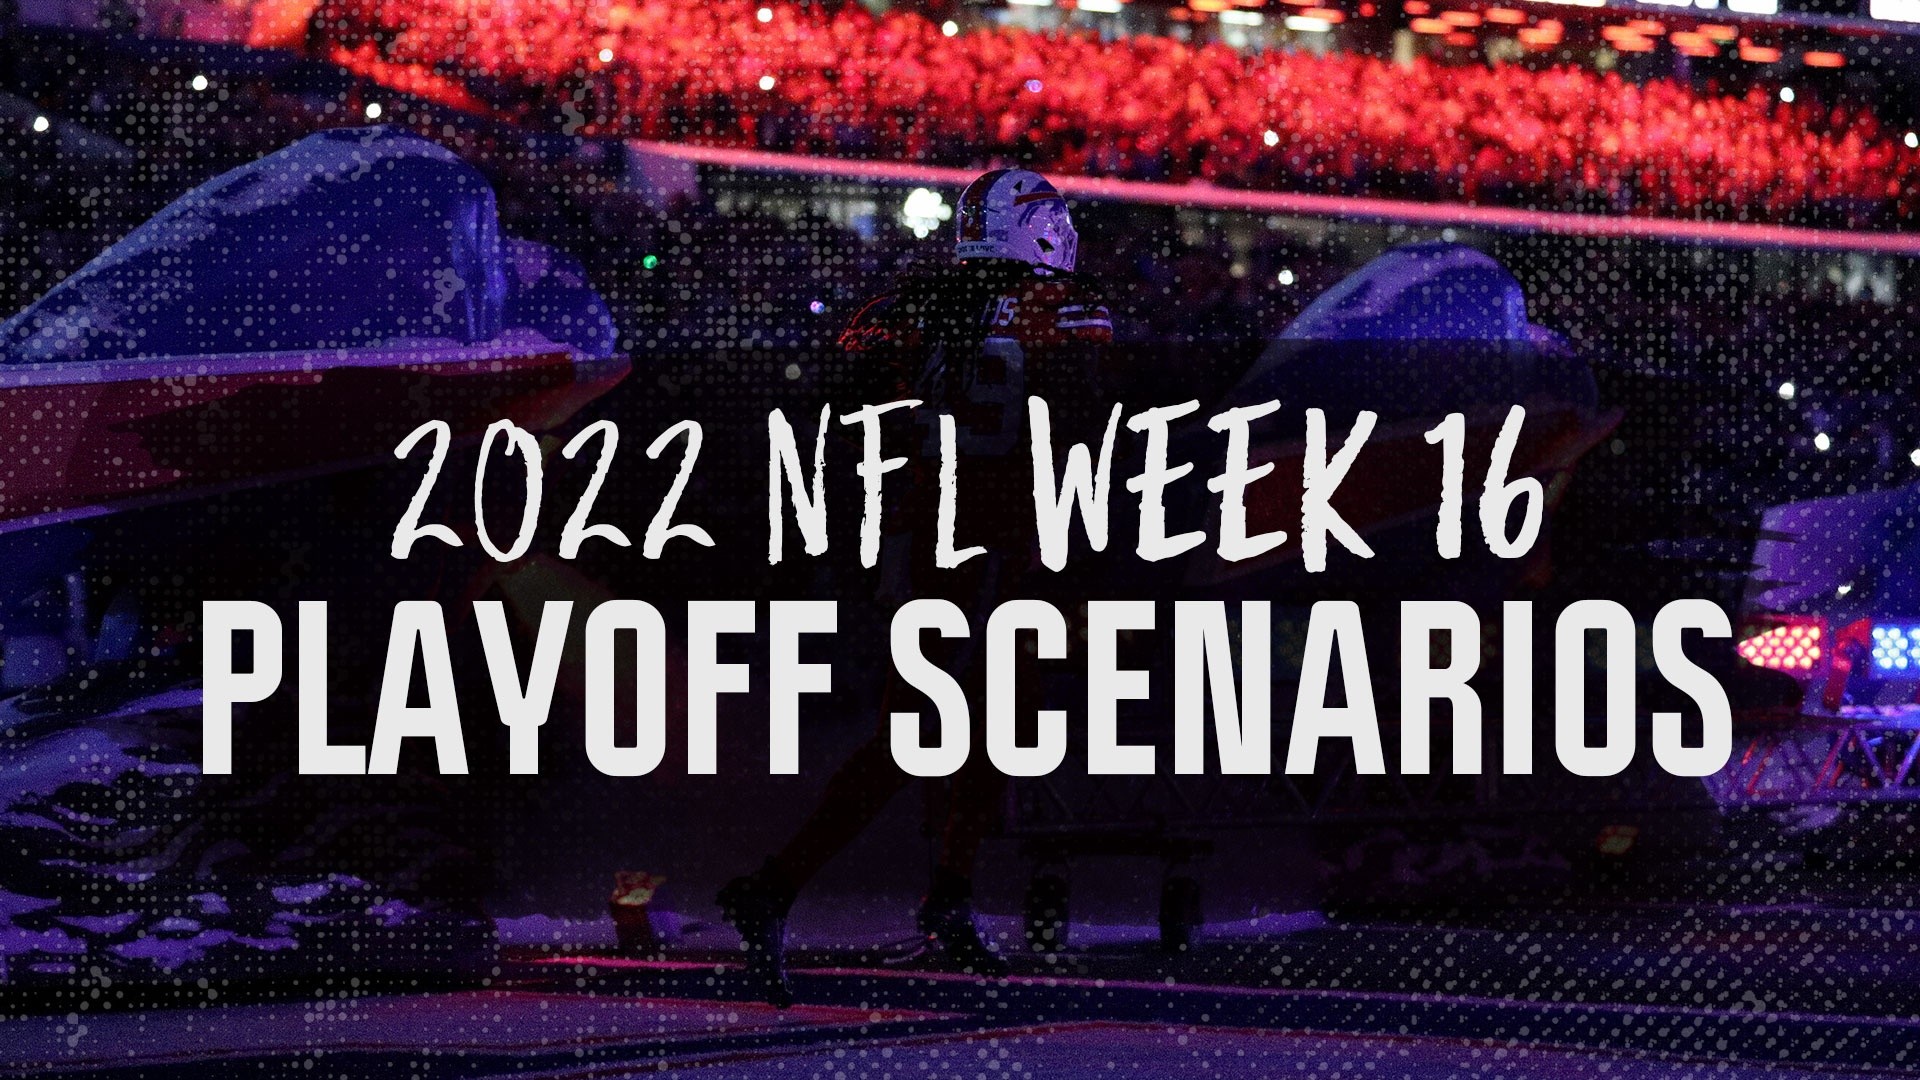 NFL Playoff Scenarios in Week 16 – NBC Boston